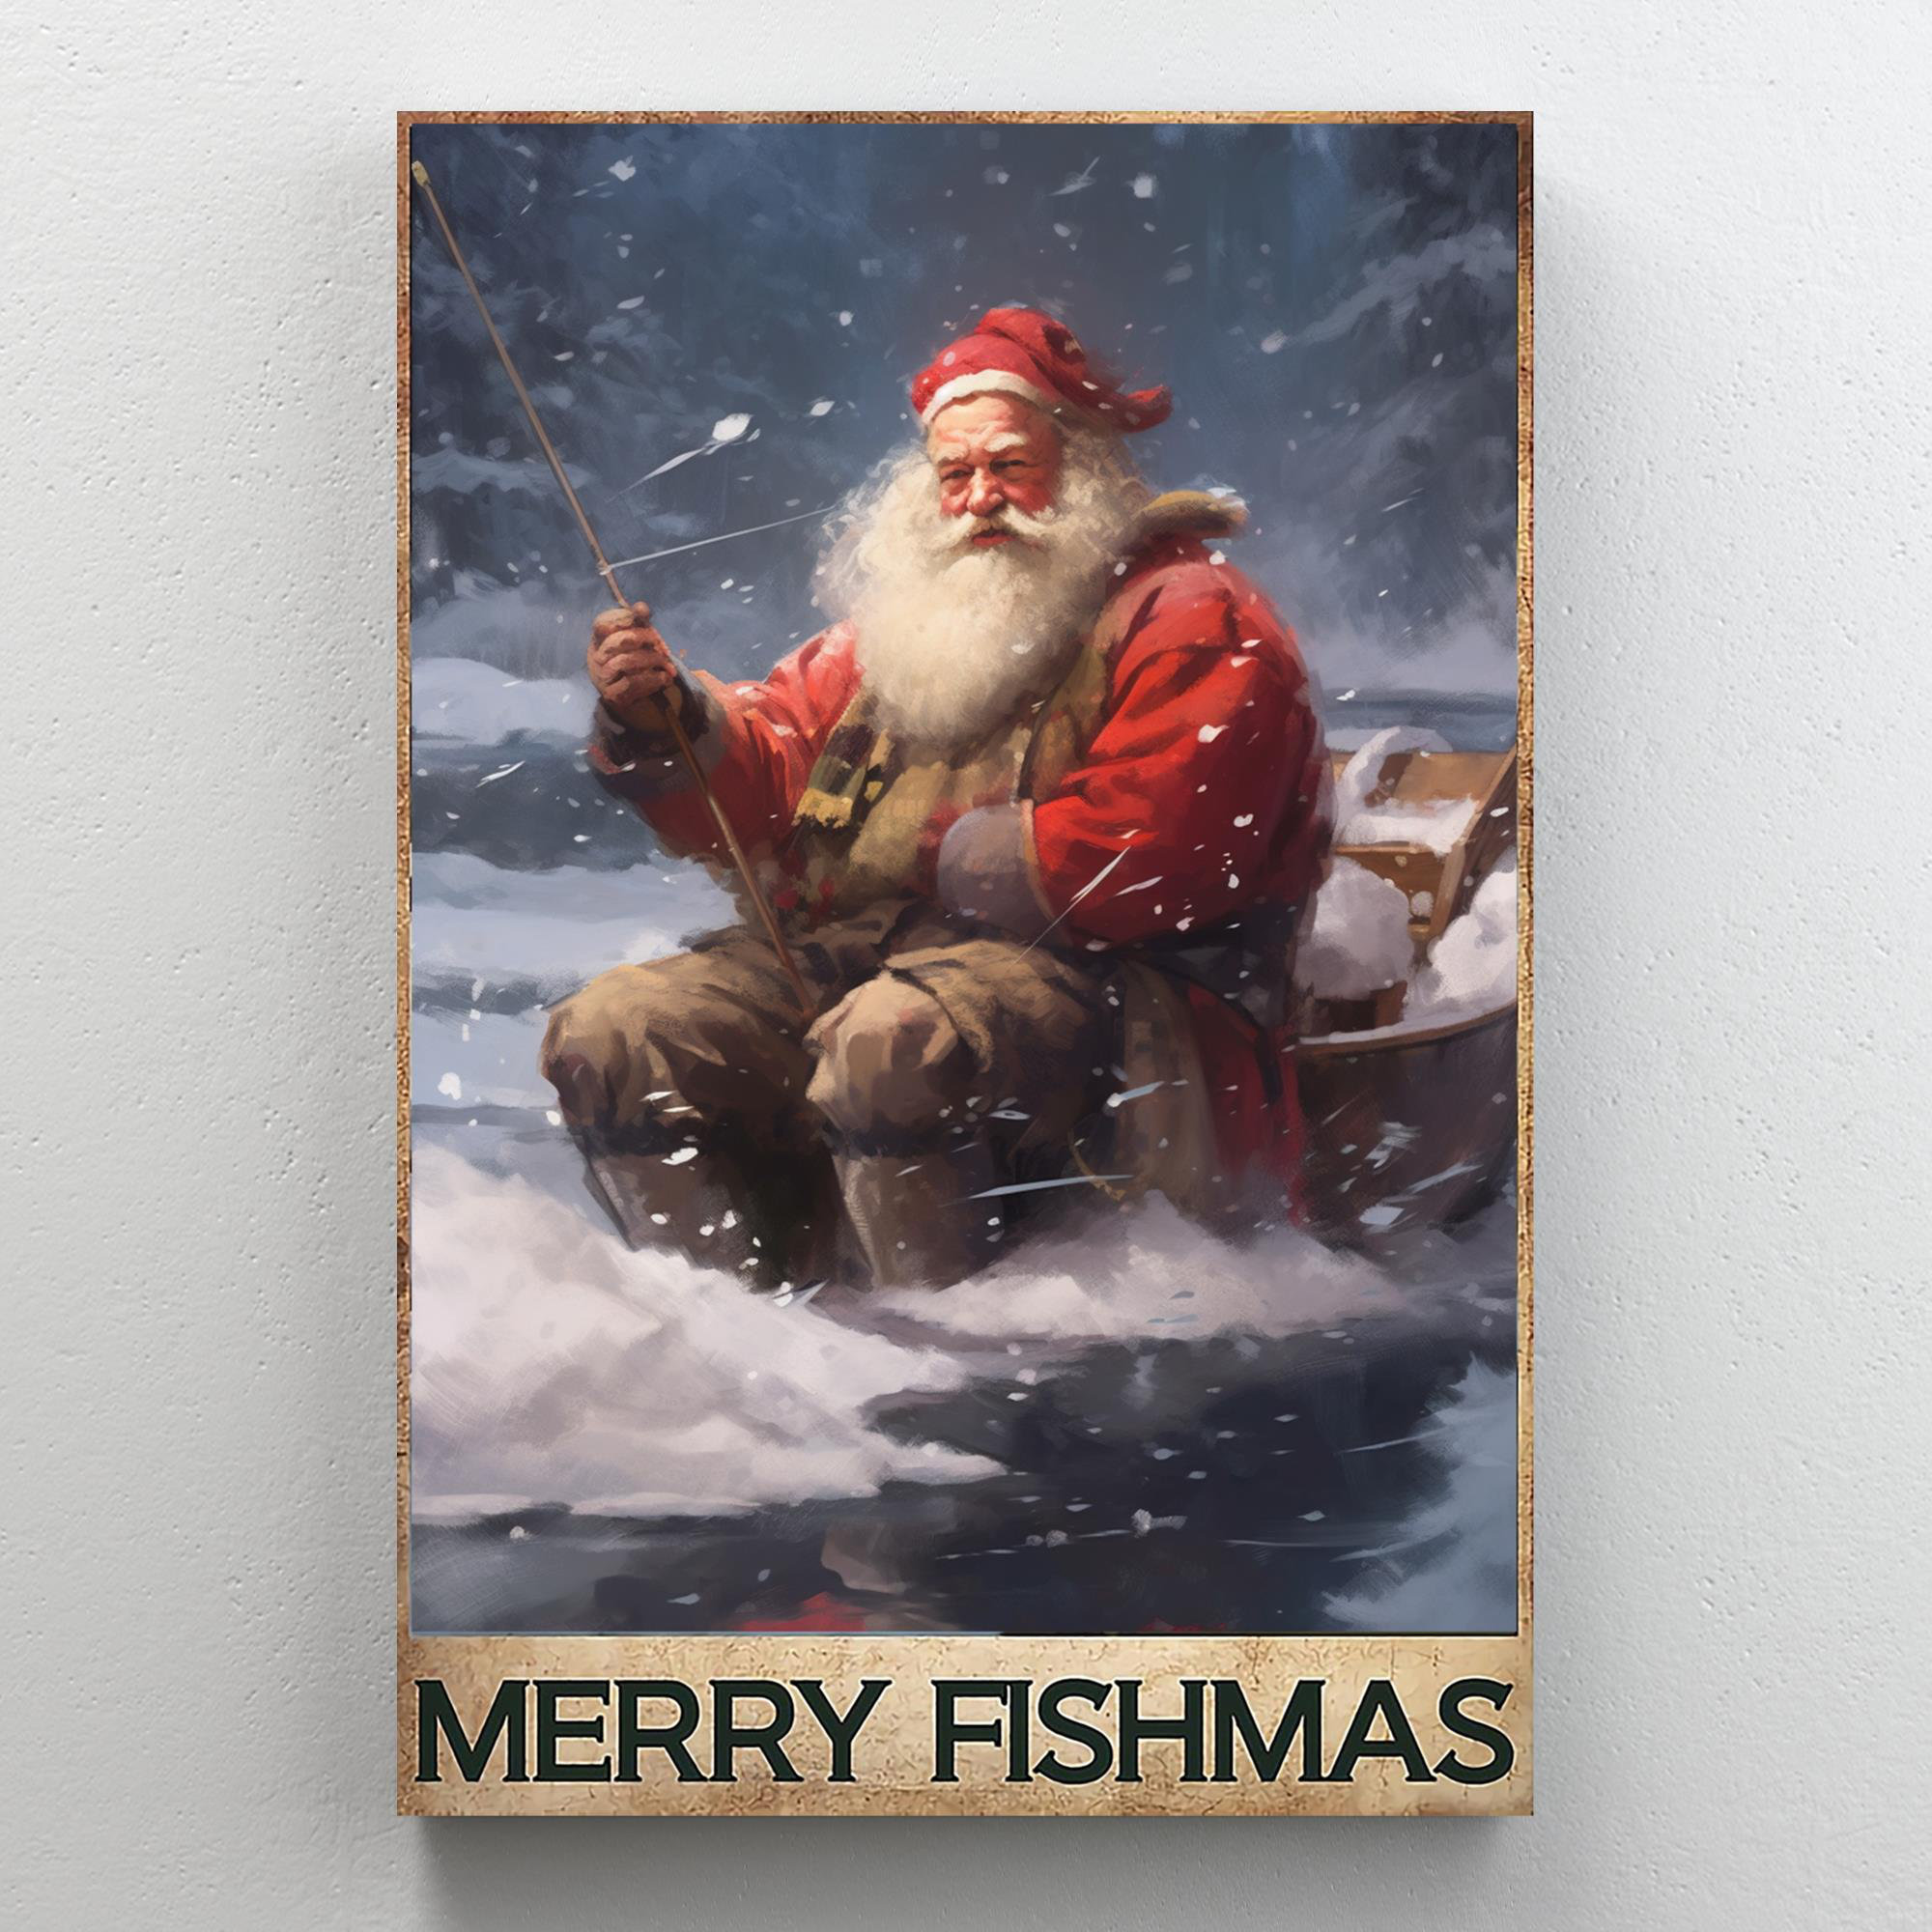 The Holiday Aisle® Merry Fishmas On Canvas Print